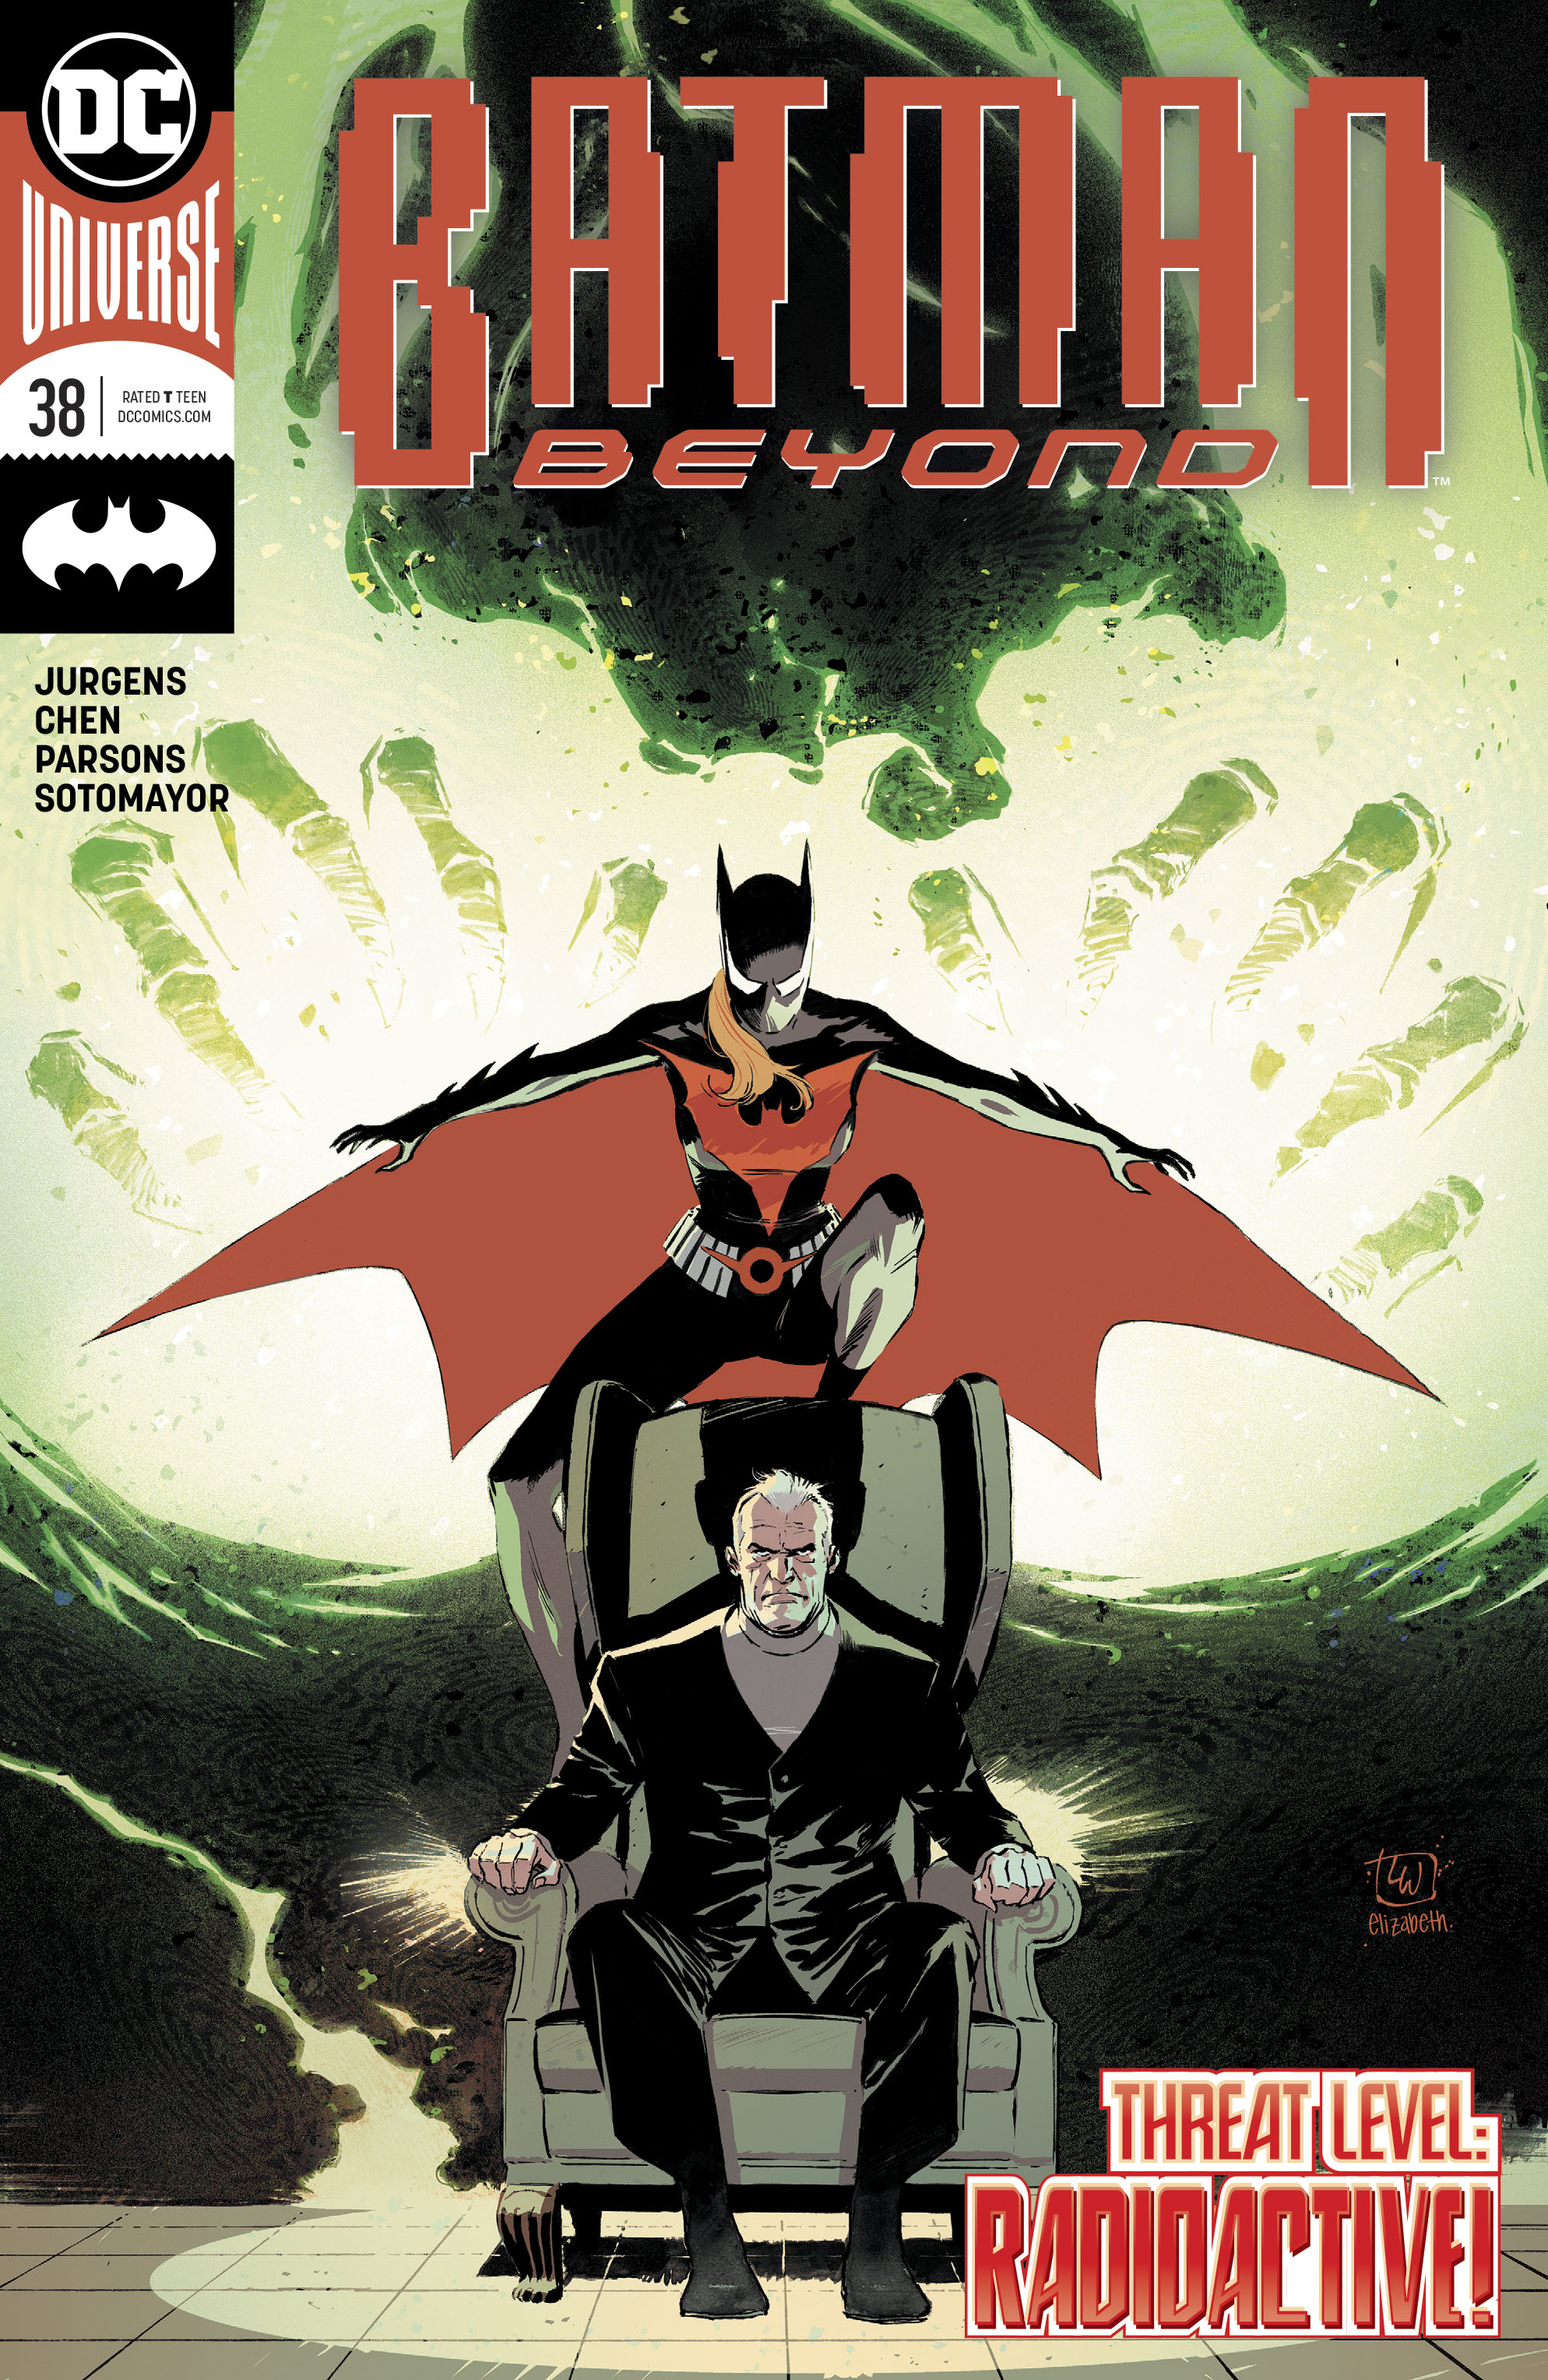 Batman Beyond 2016 Issue 38 | Read Batman Beyond 2016 Issue 38 comic online  in high quality. Read Full Comic online for free - Read comics online in  high quality .|